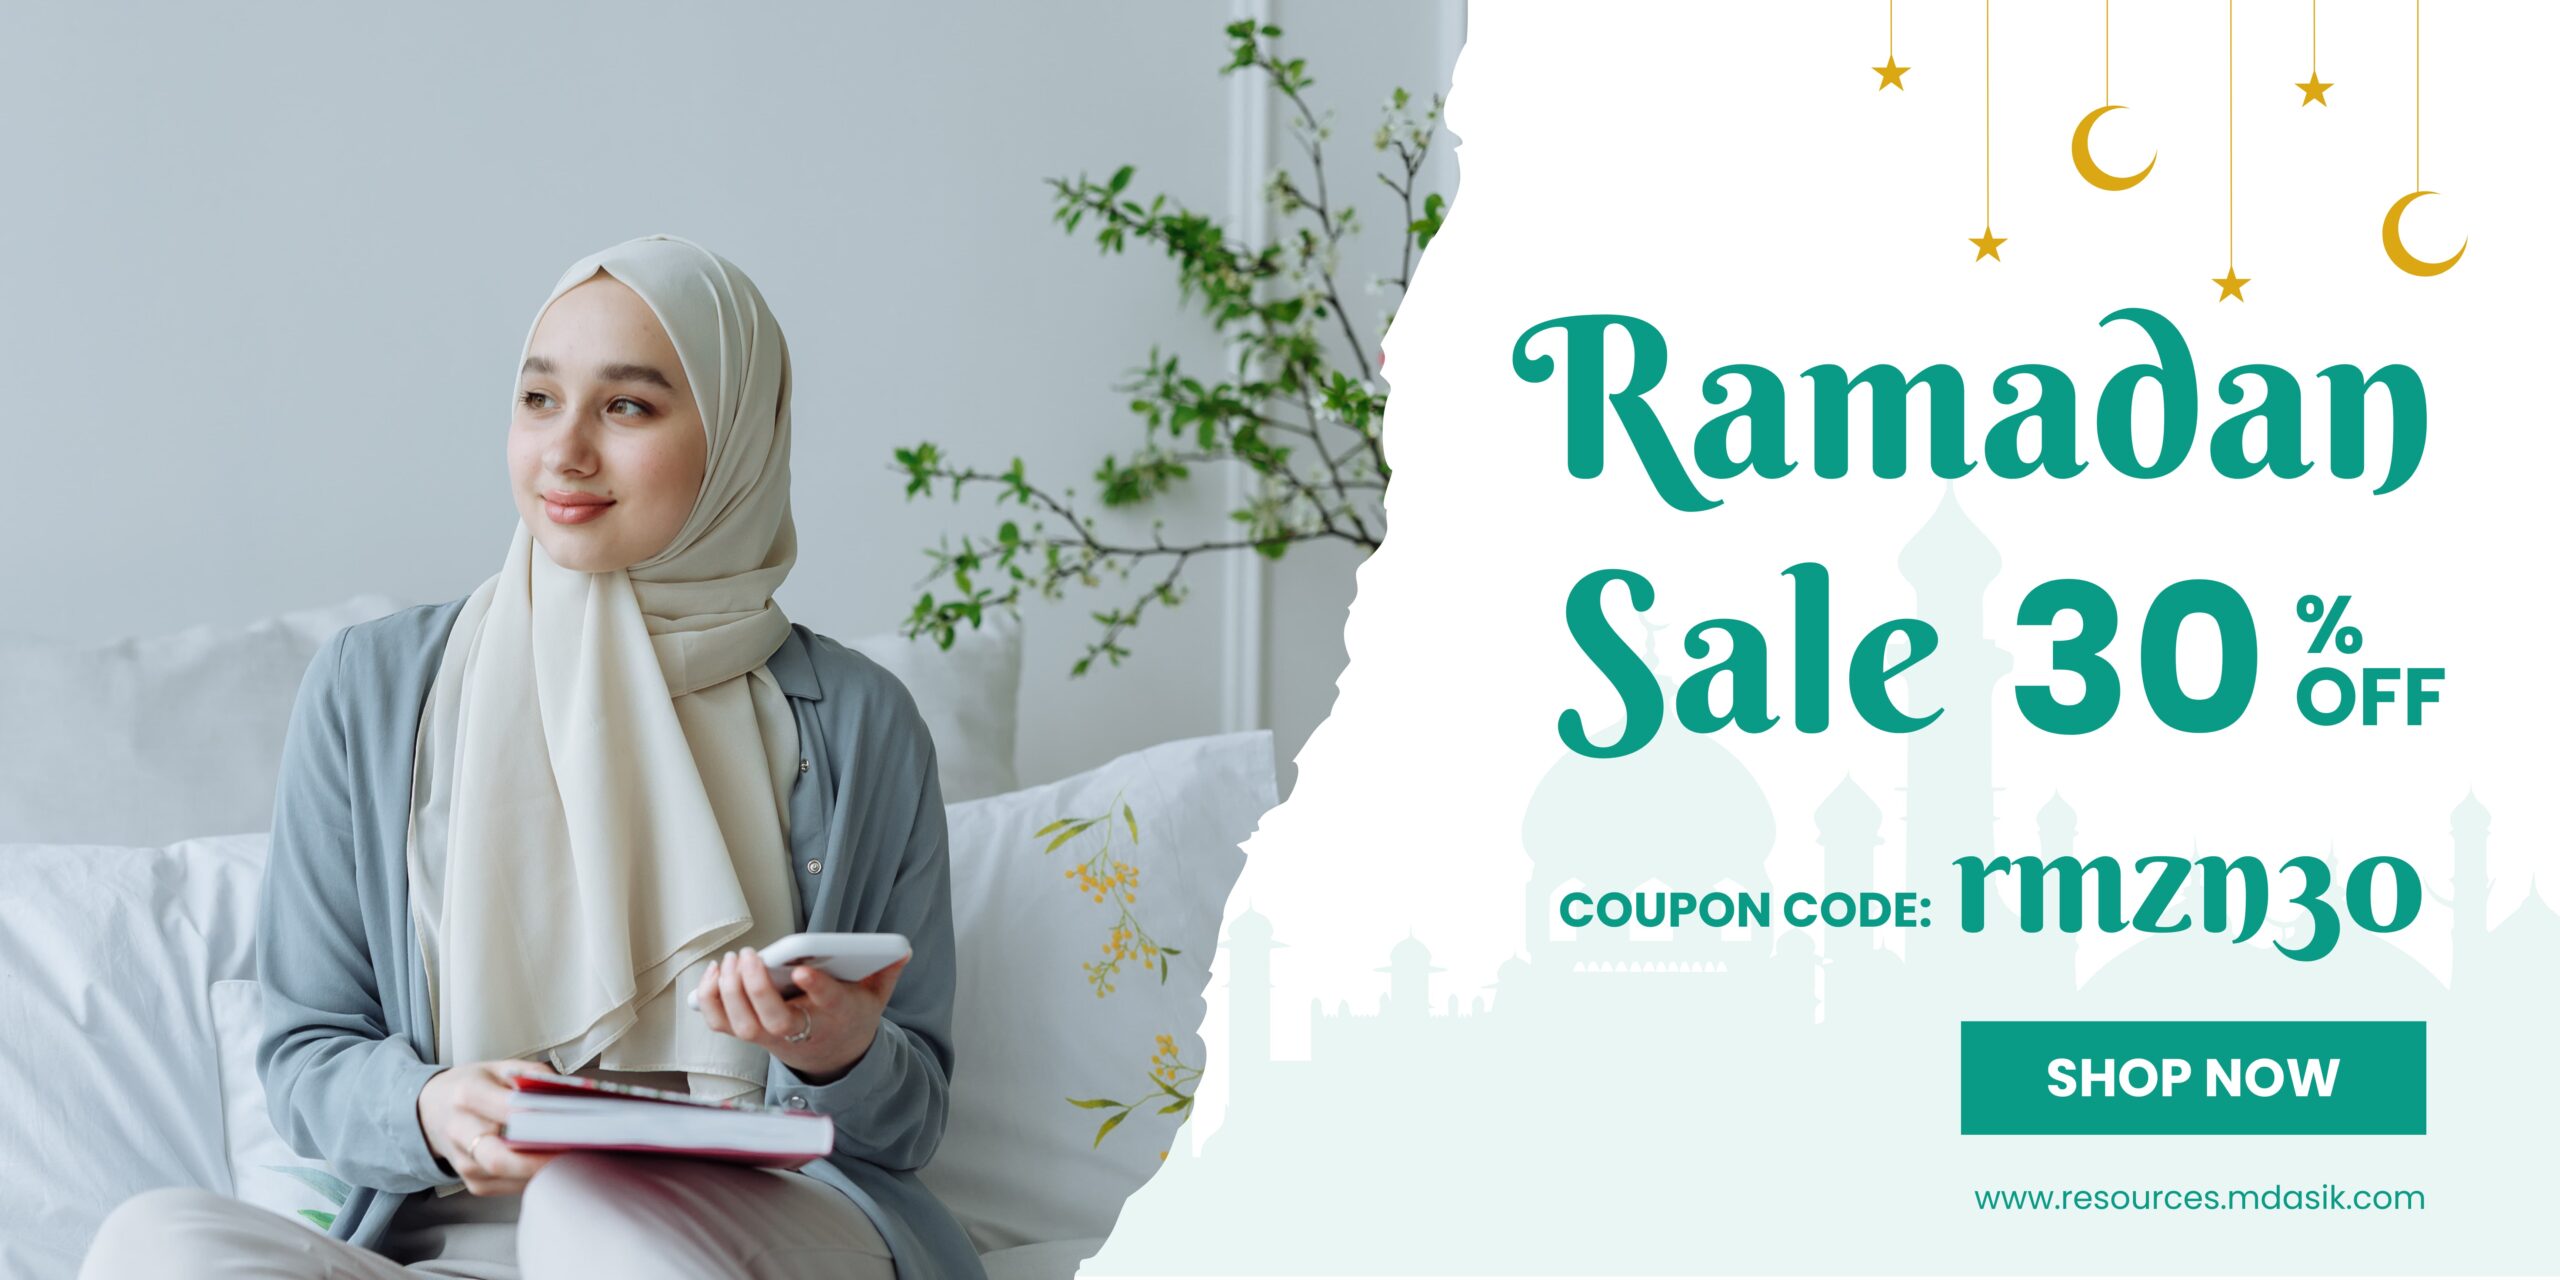 Ramzan Sale Offer 30% discount